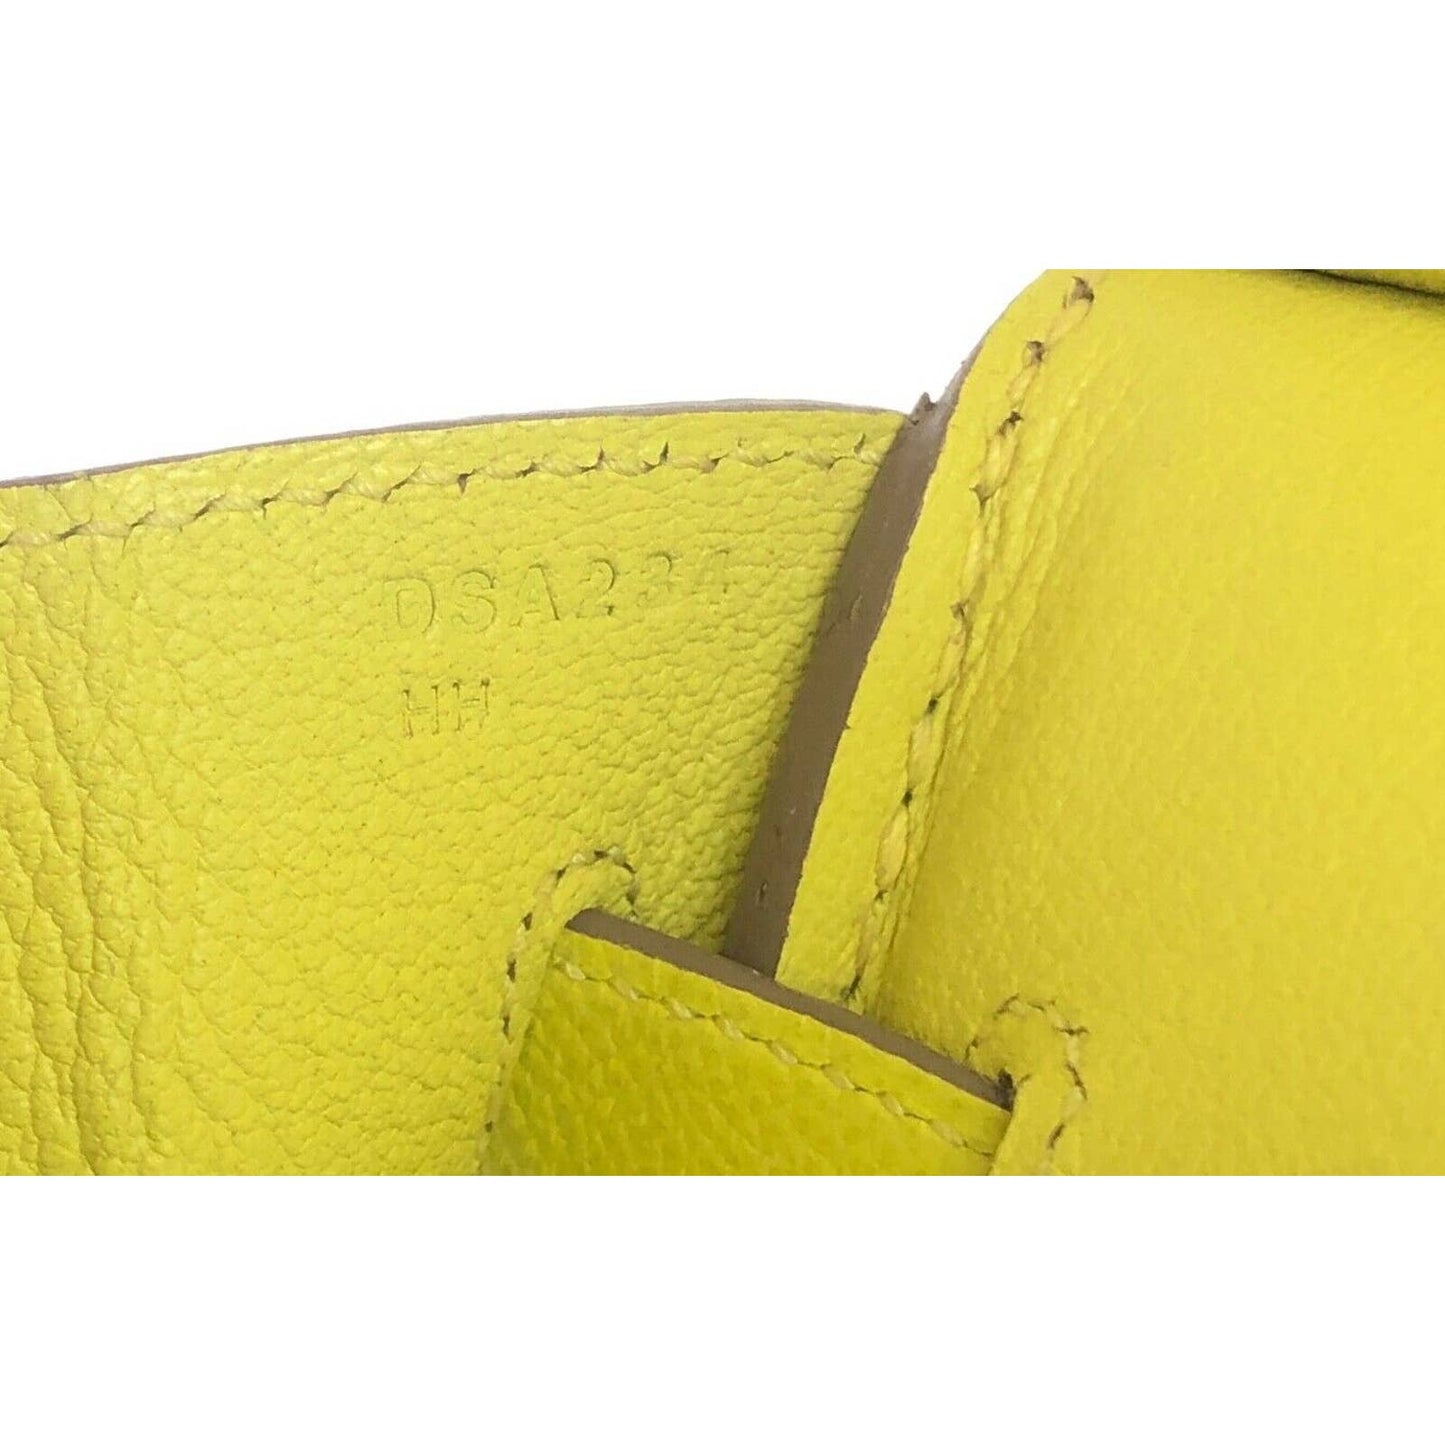 Hermes Birkin 30 Lime Yellow Epsom Leather Gold Hardware Bag Handbag